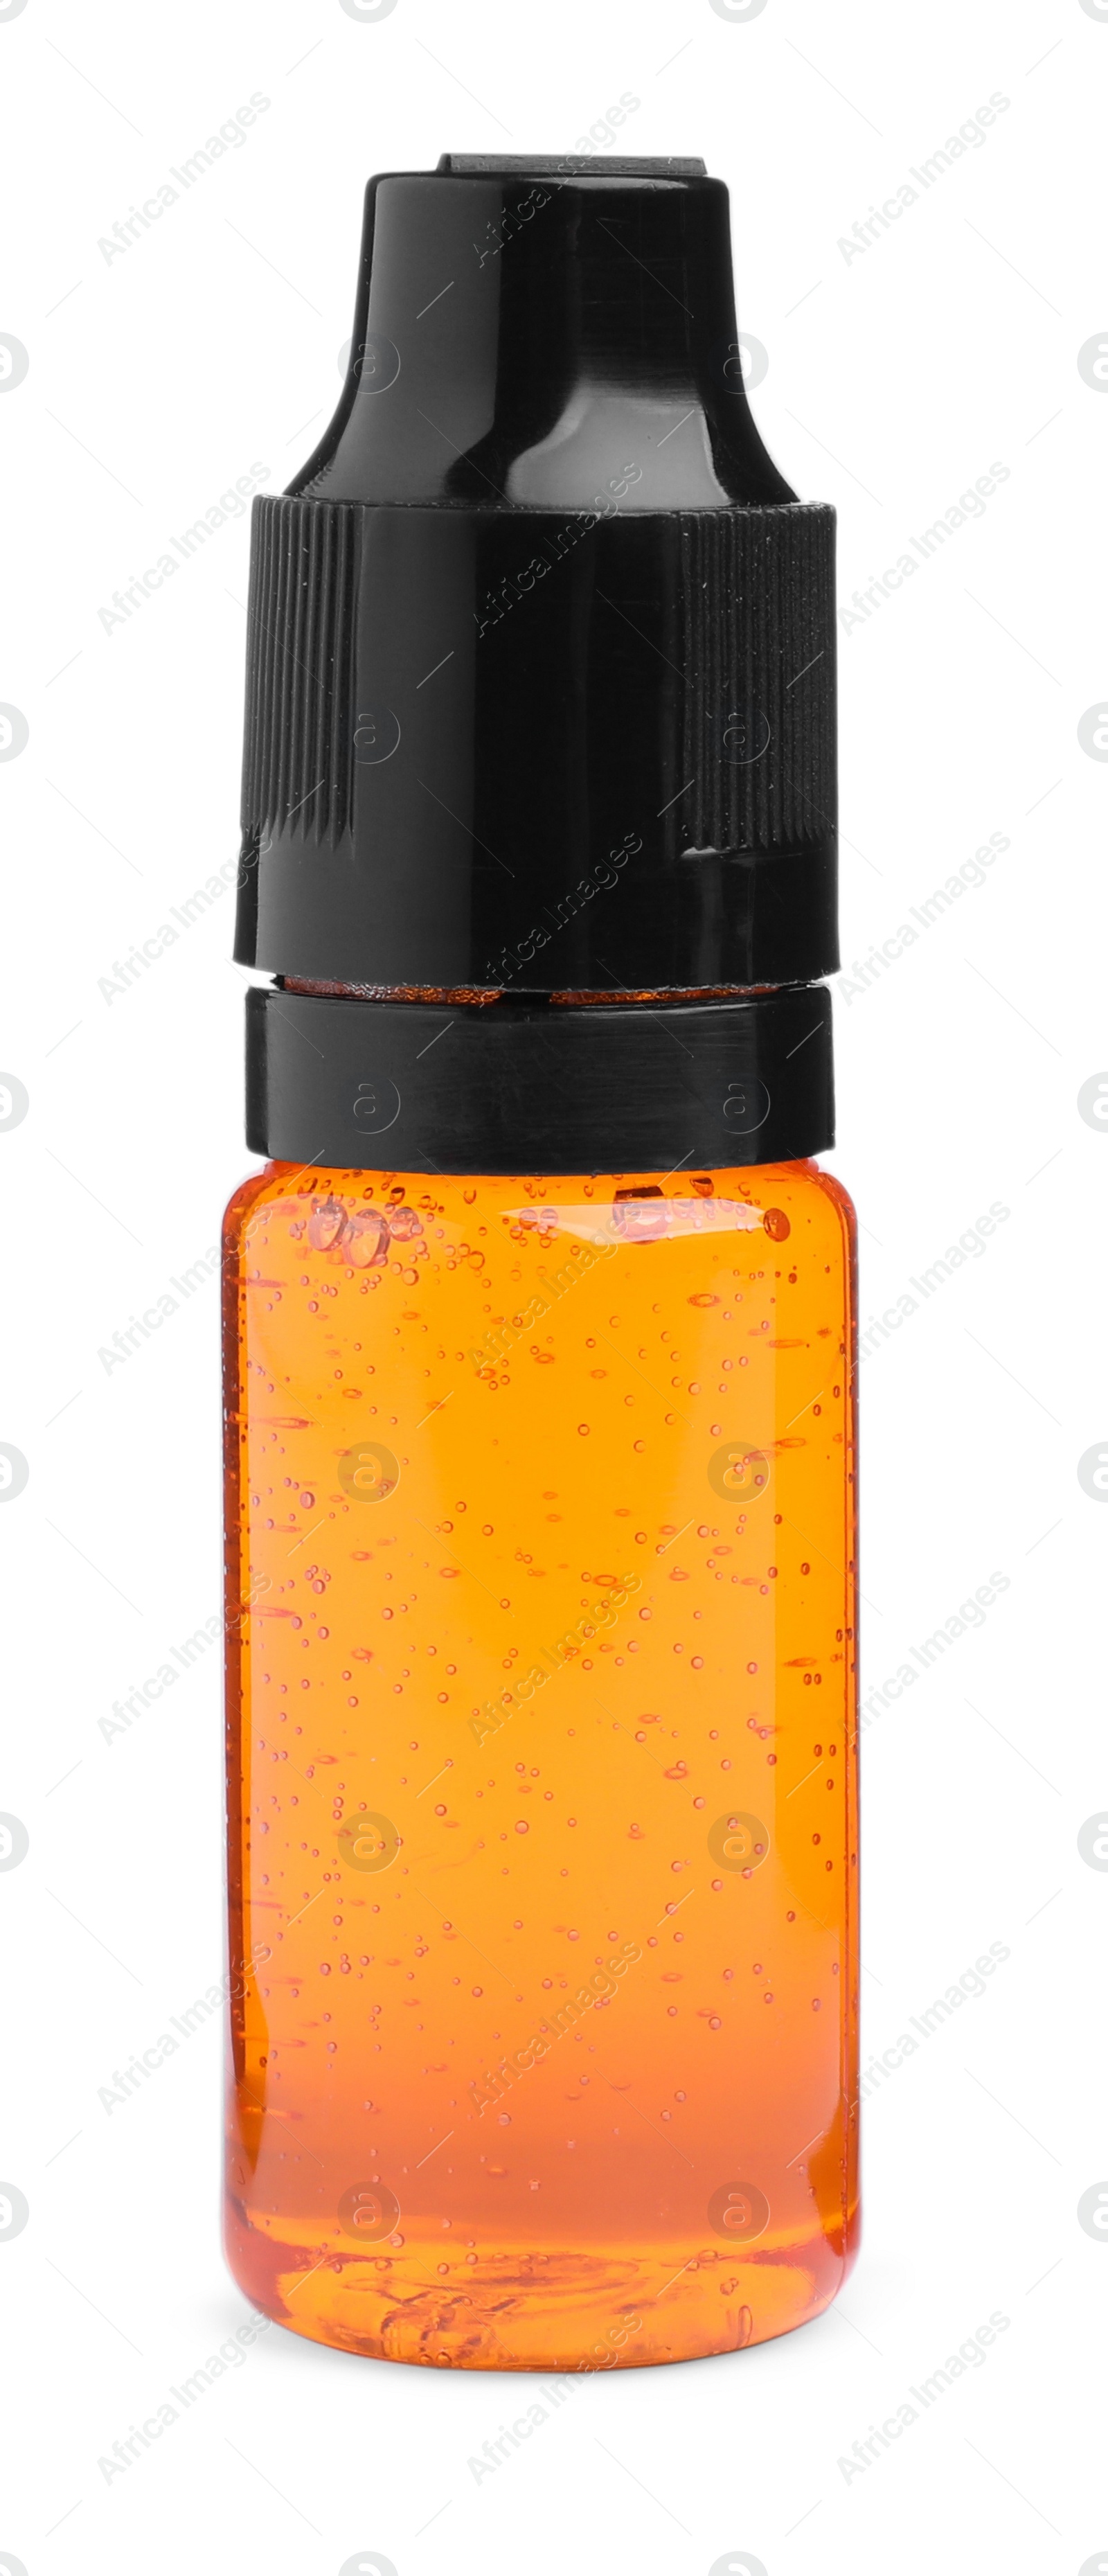 Photo of Bottle of orange food coloring on white background